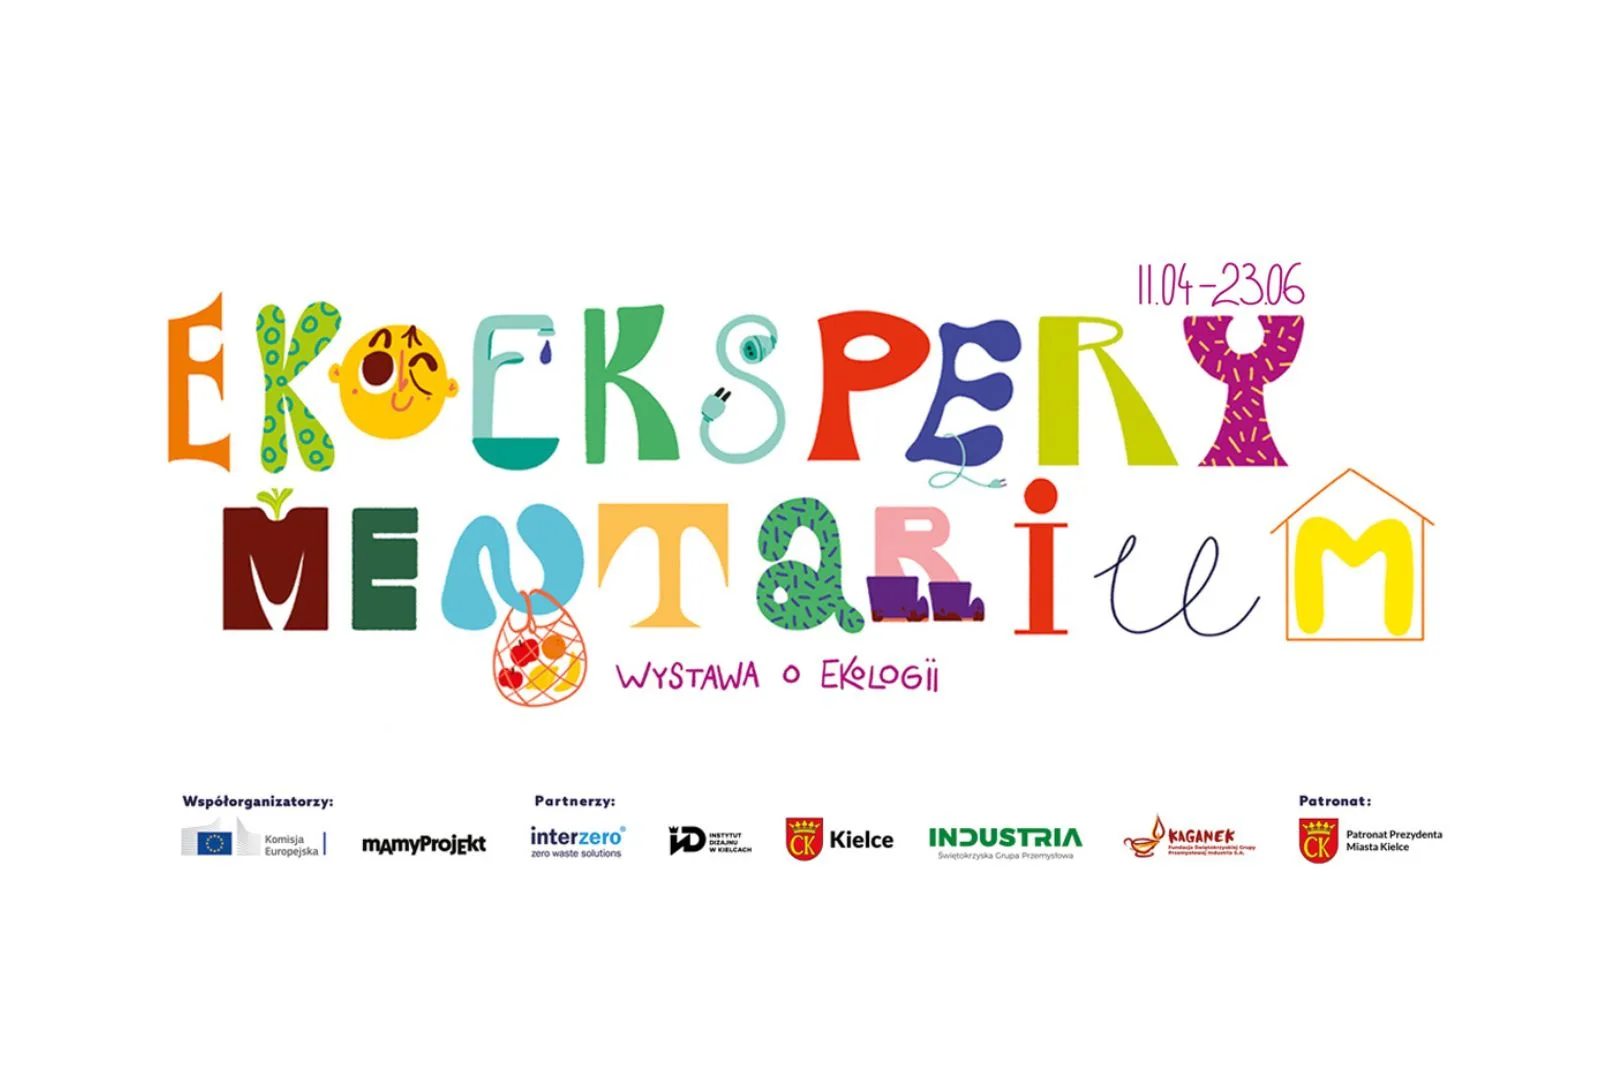 EkoEksperymentarium Kielce |  11.04 - 23.06 | Interzero